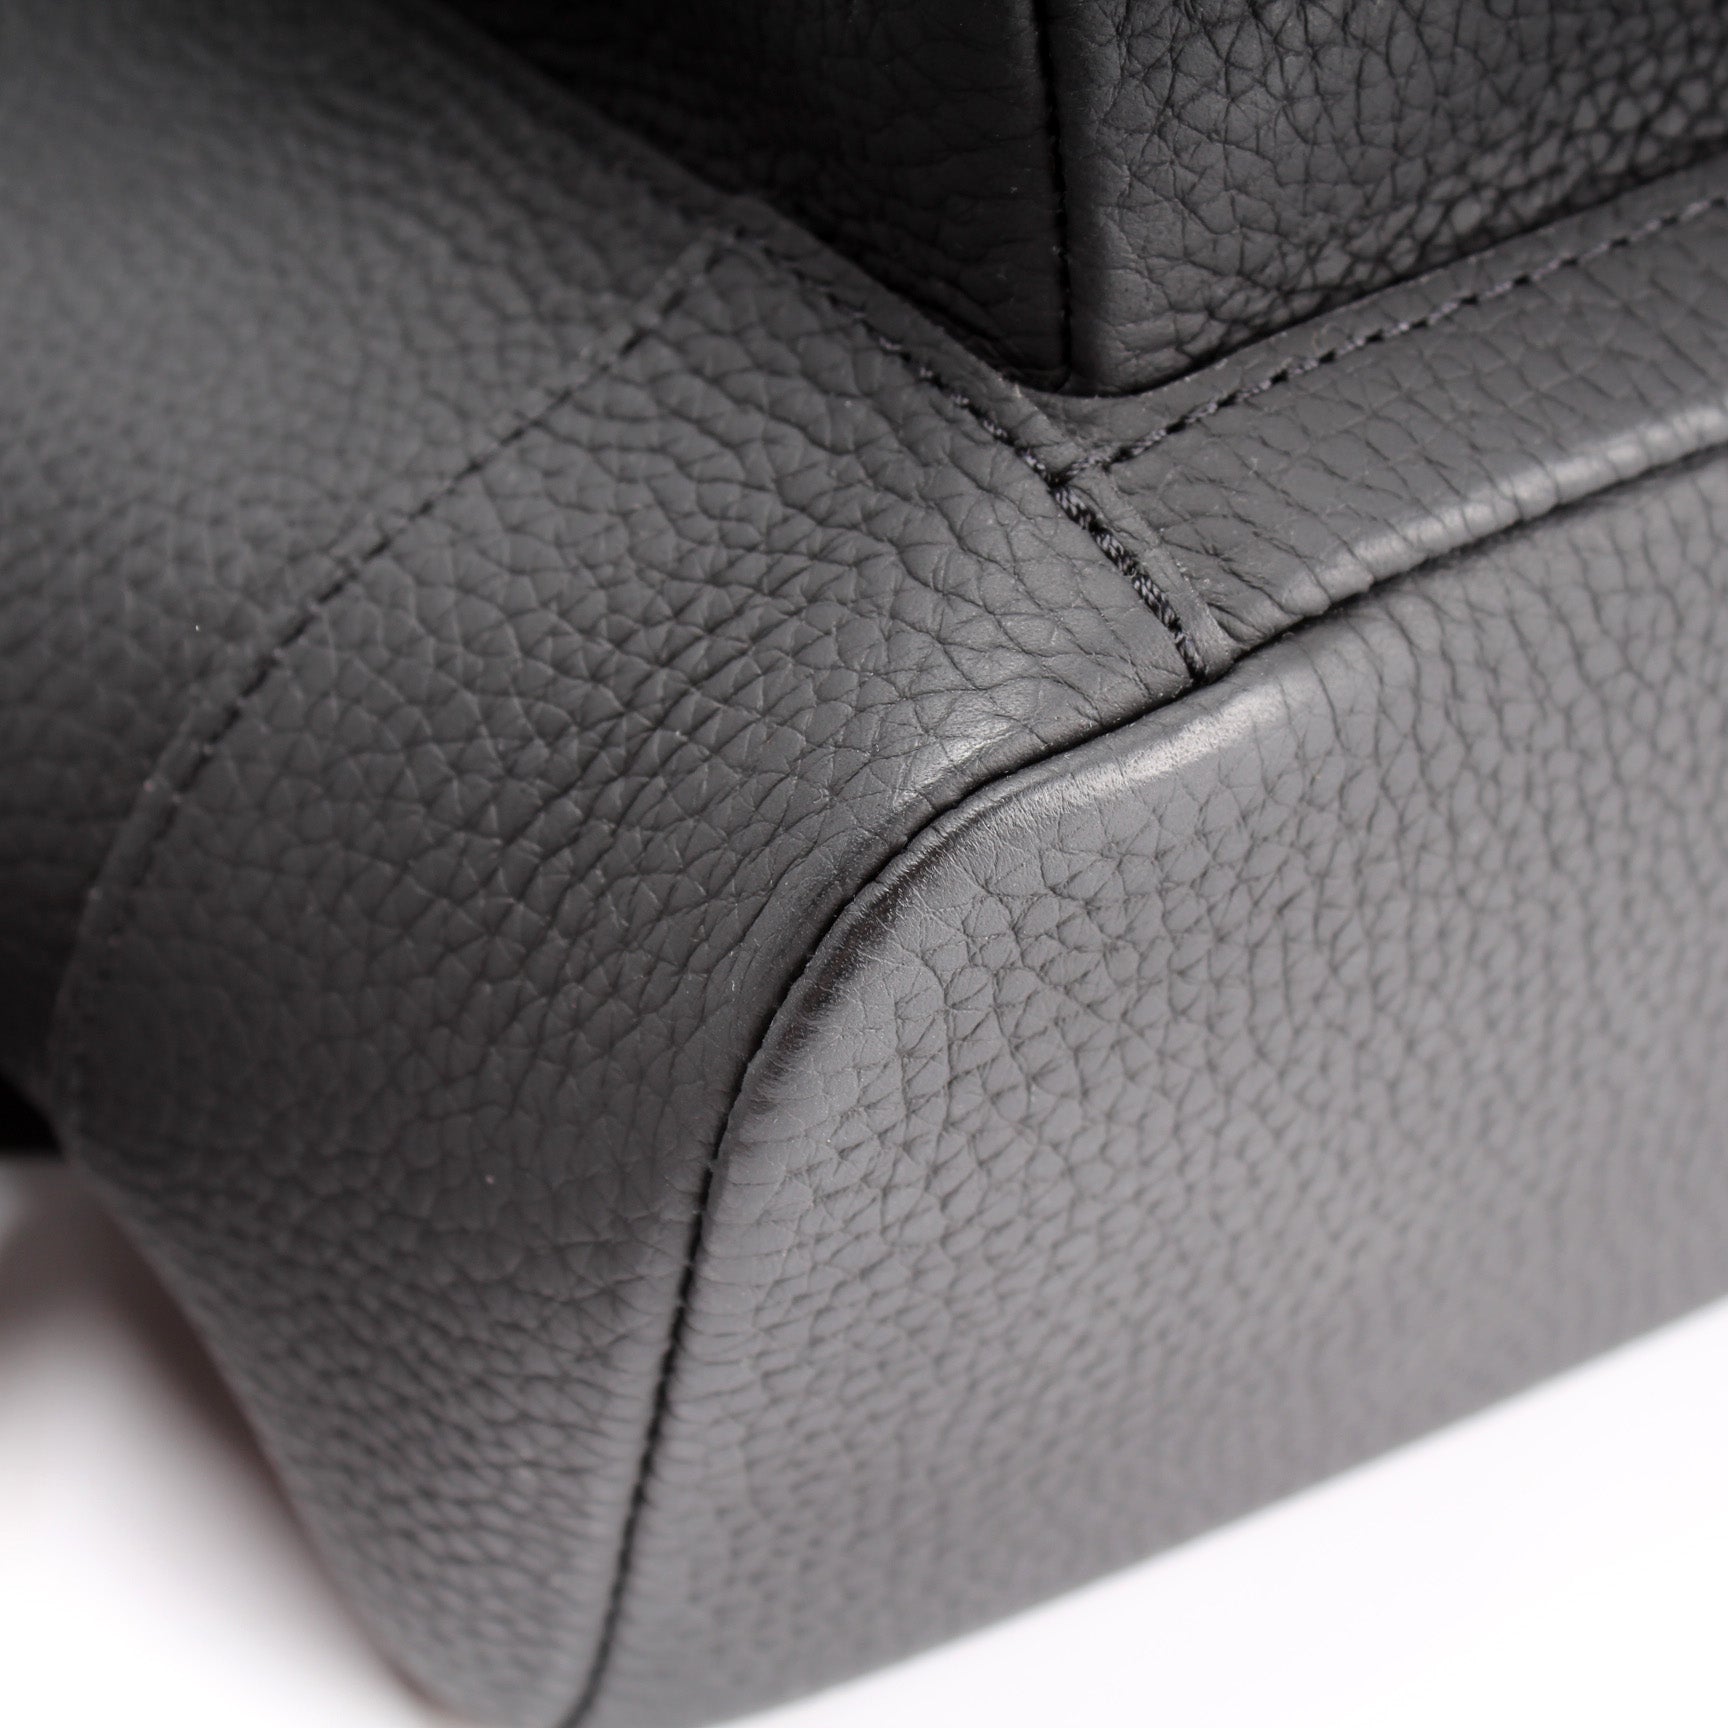 Ba Lô Christopher Slim Backpack Taurillon Leather đen best quality